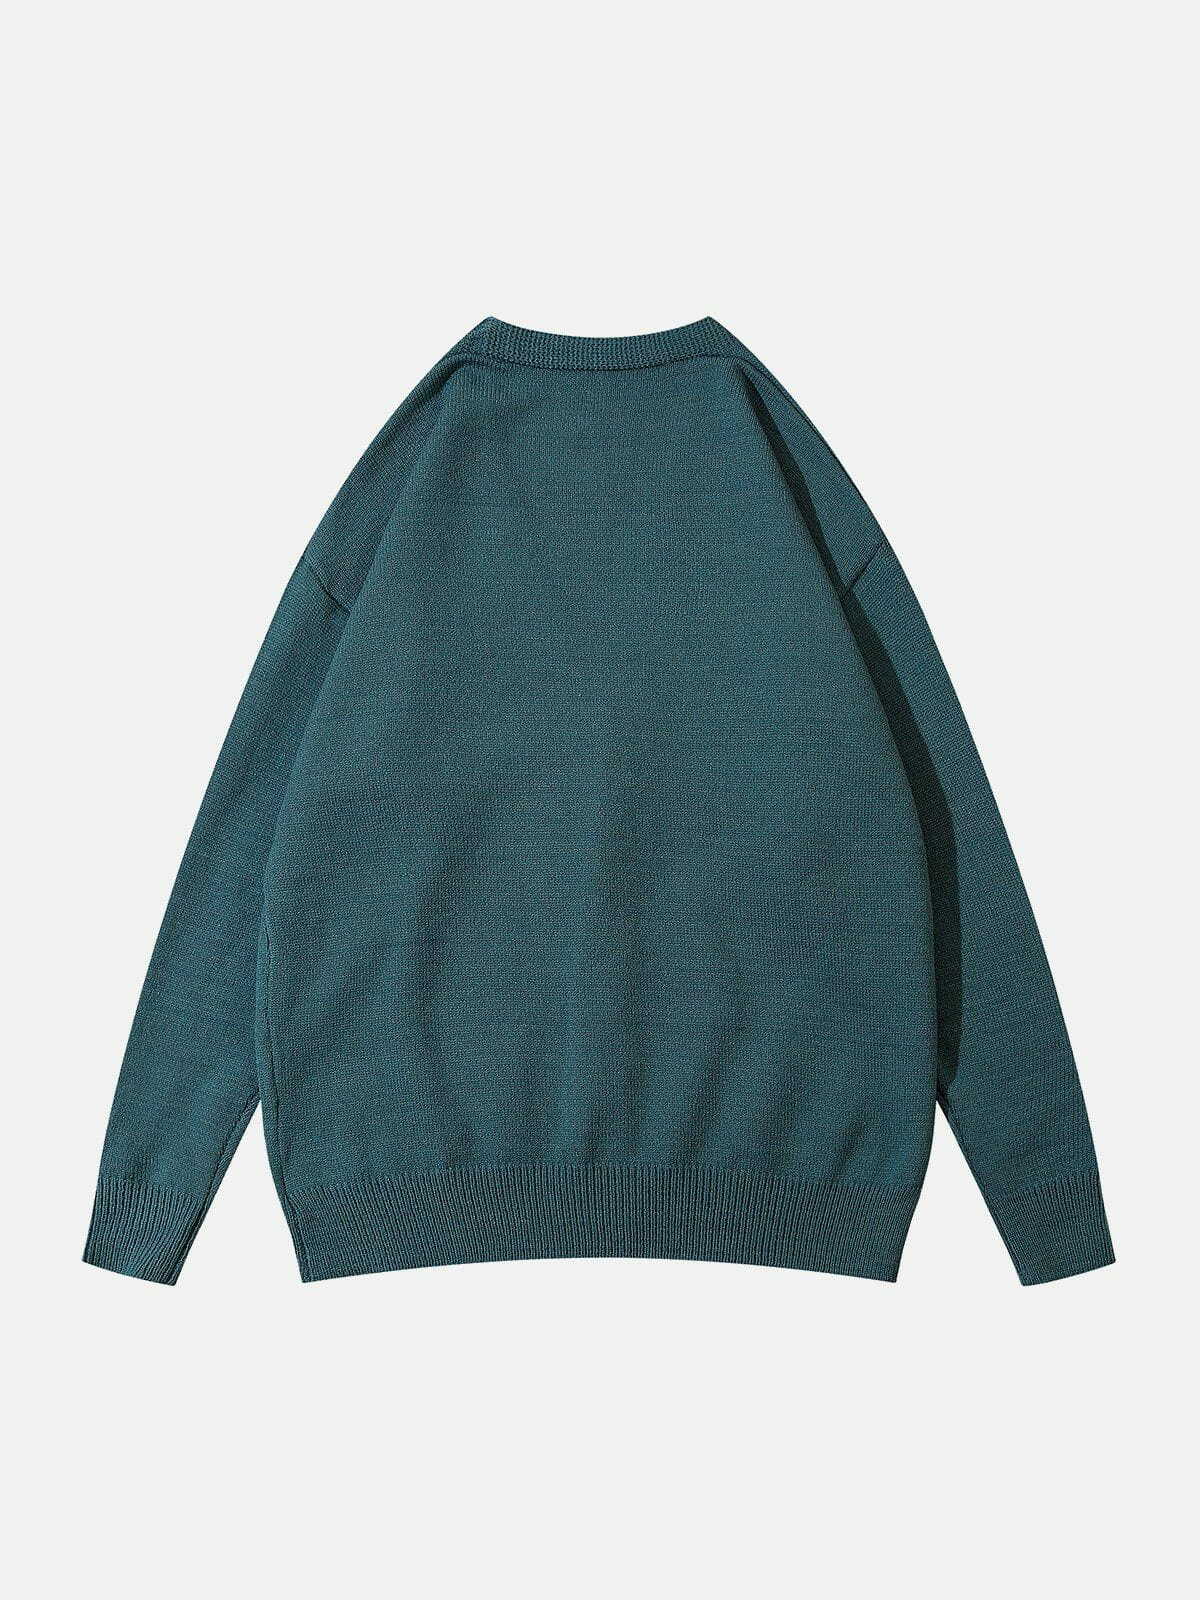 quirky knit cardigan cozy & youthful streetwear 6381